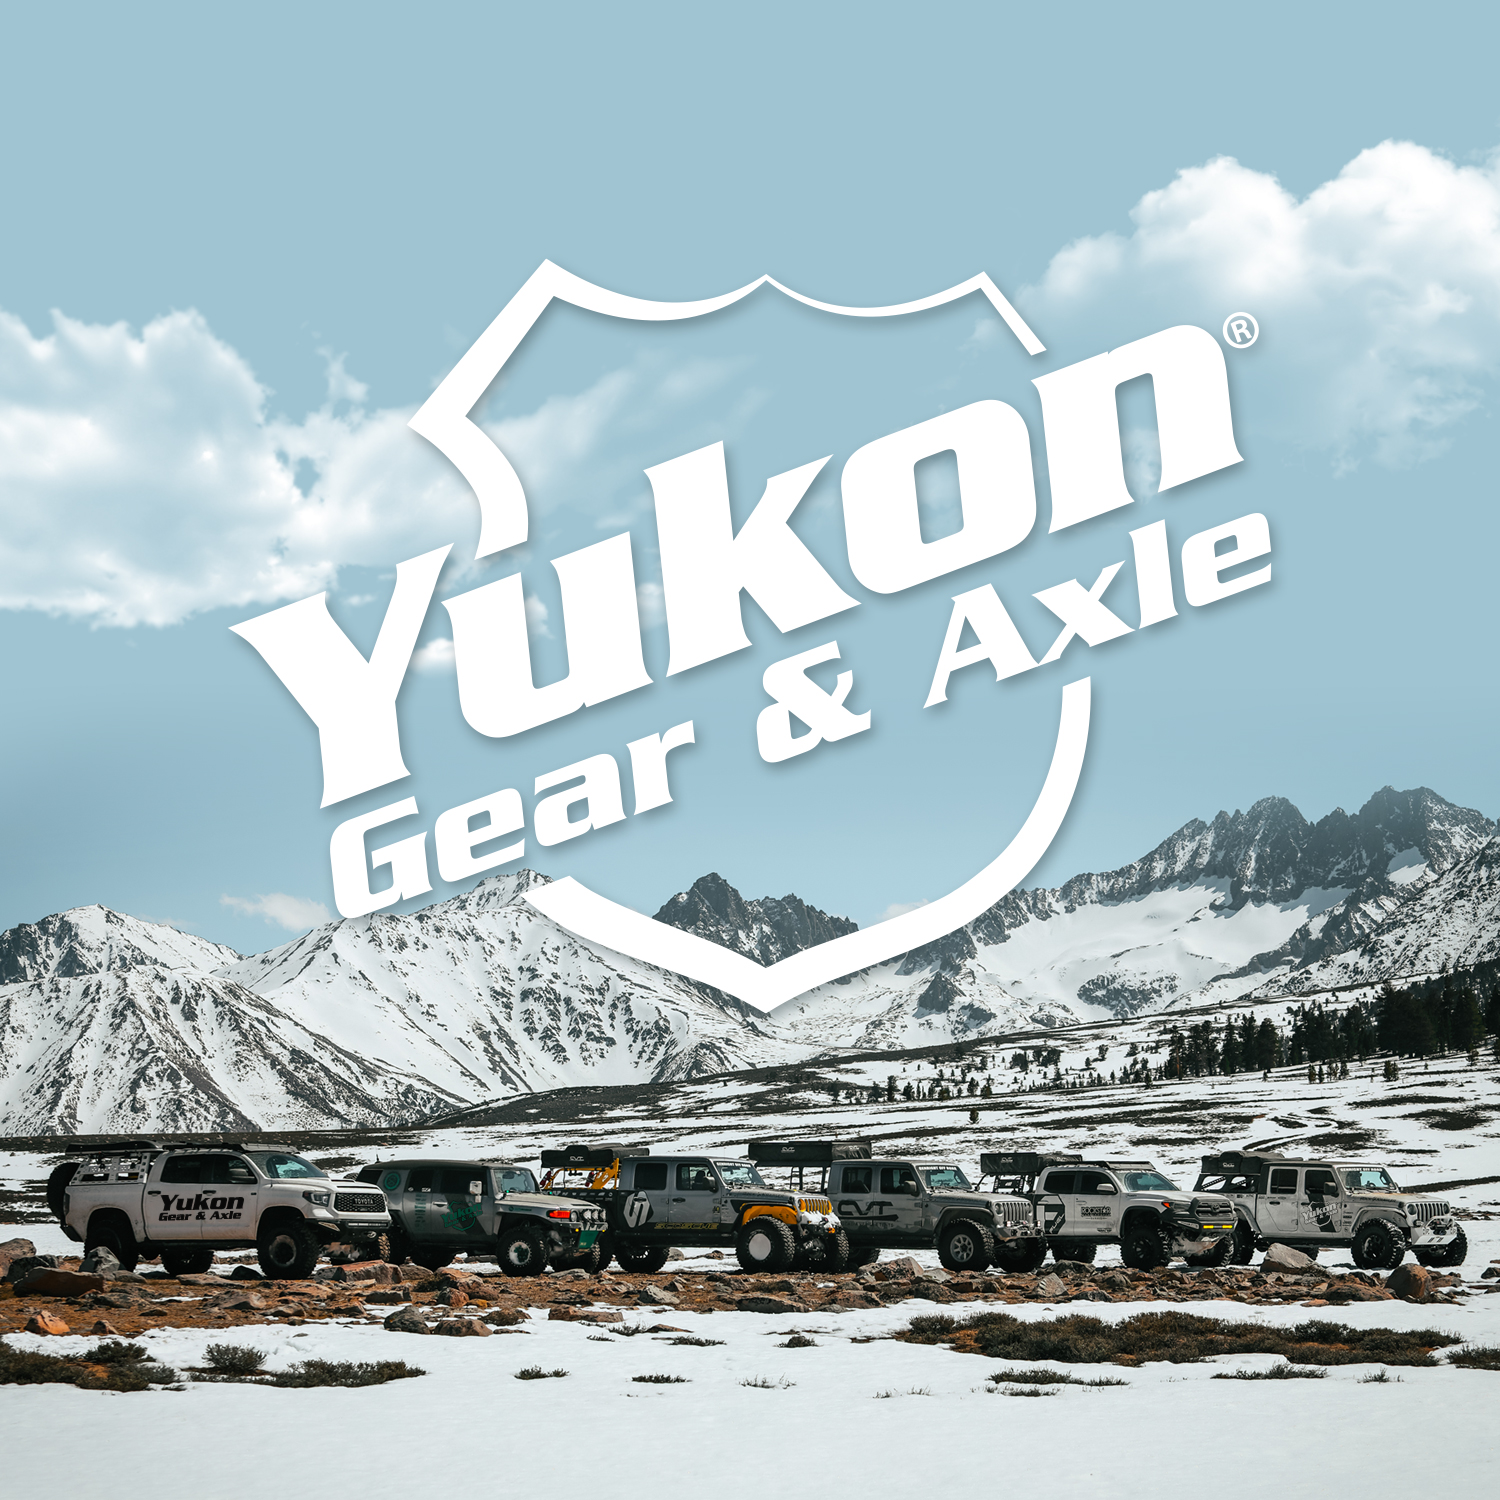 Yukon Minor install kit for Dana 80 differential (4.125" O.D. pinion race) 